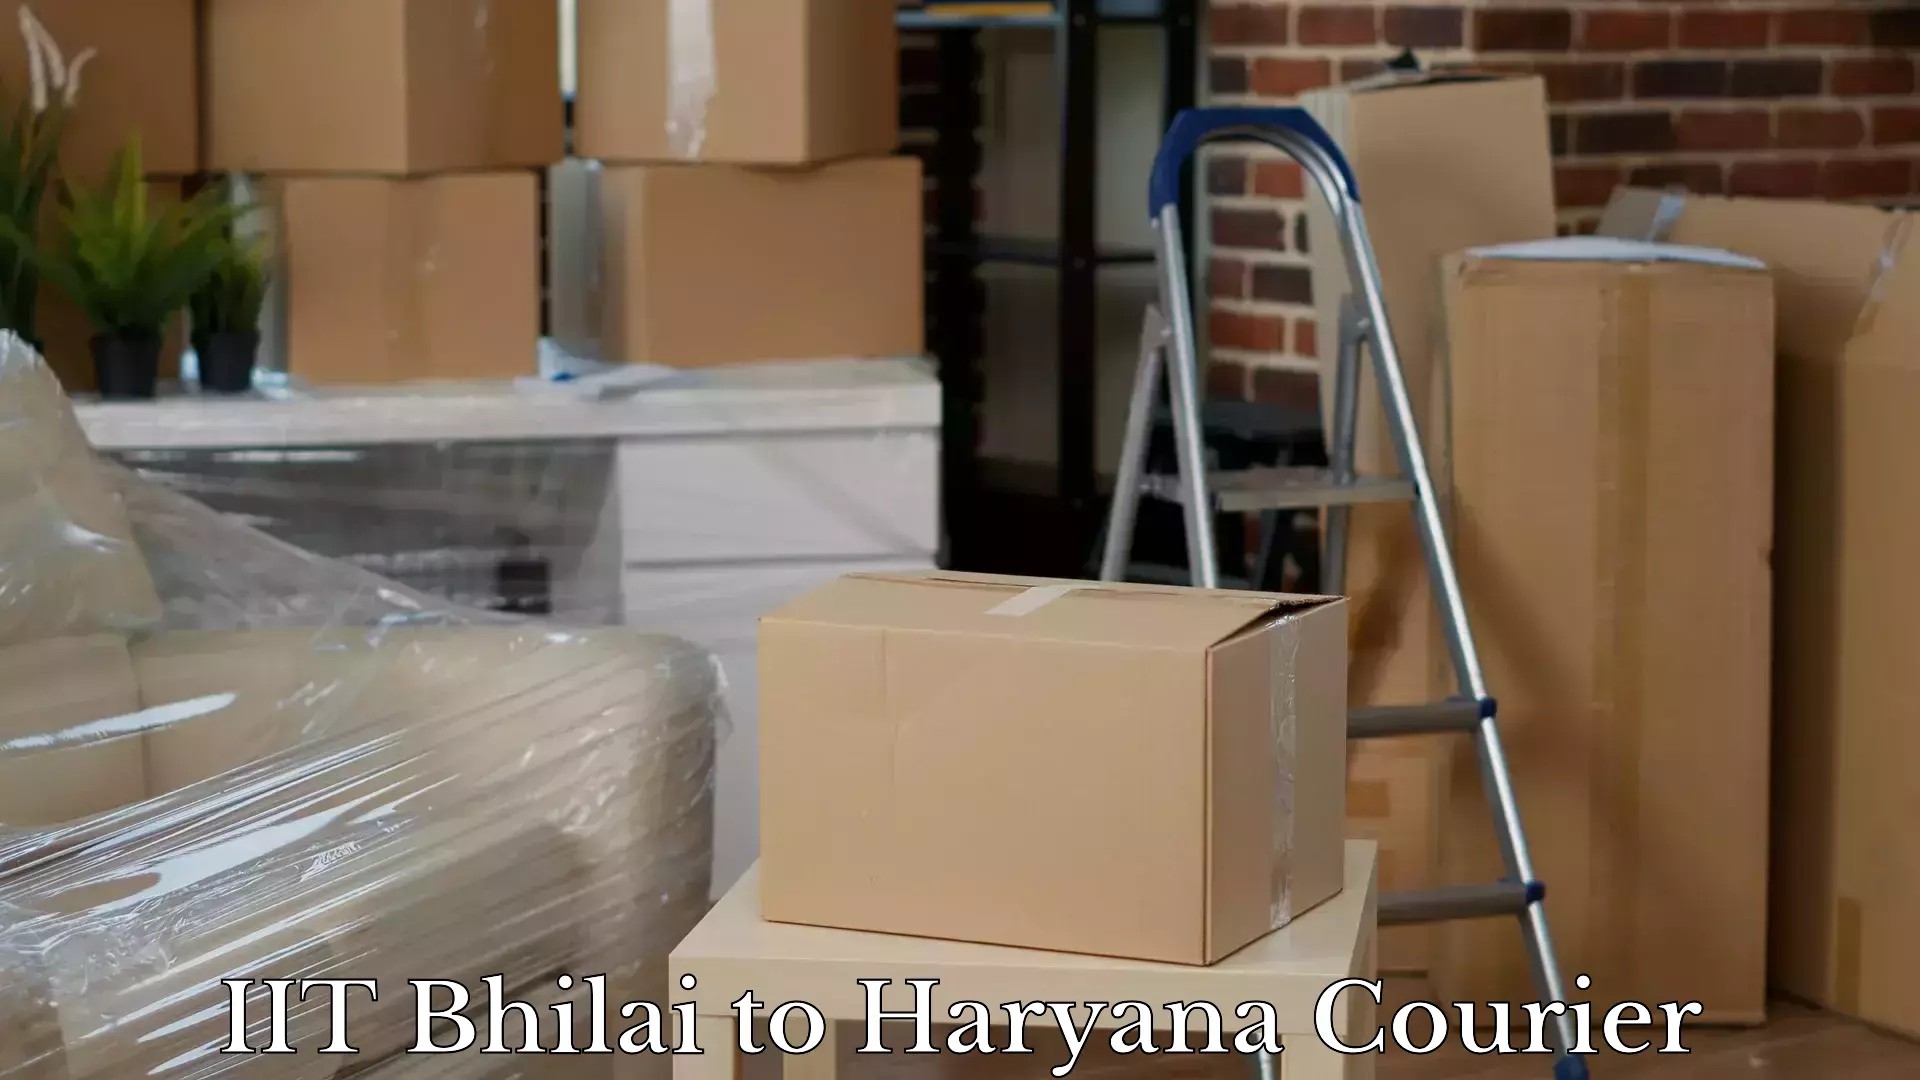 Luggage transfer service IIT Bhilai to Bhiwani